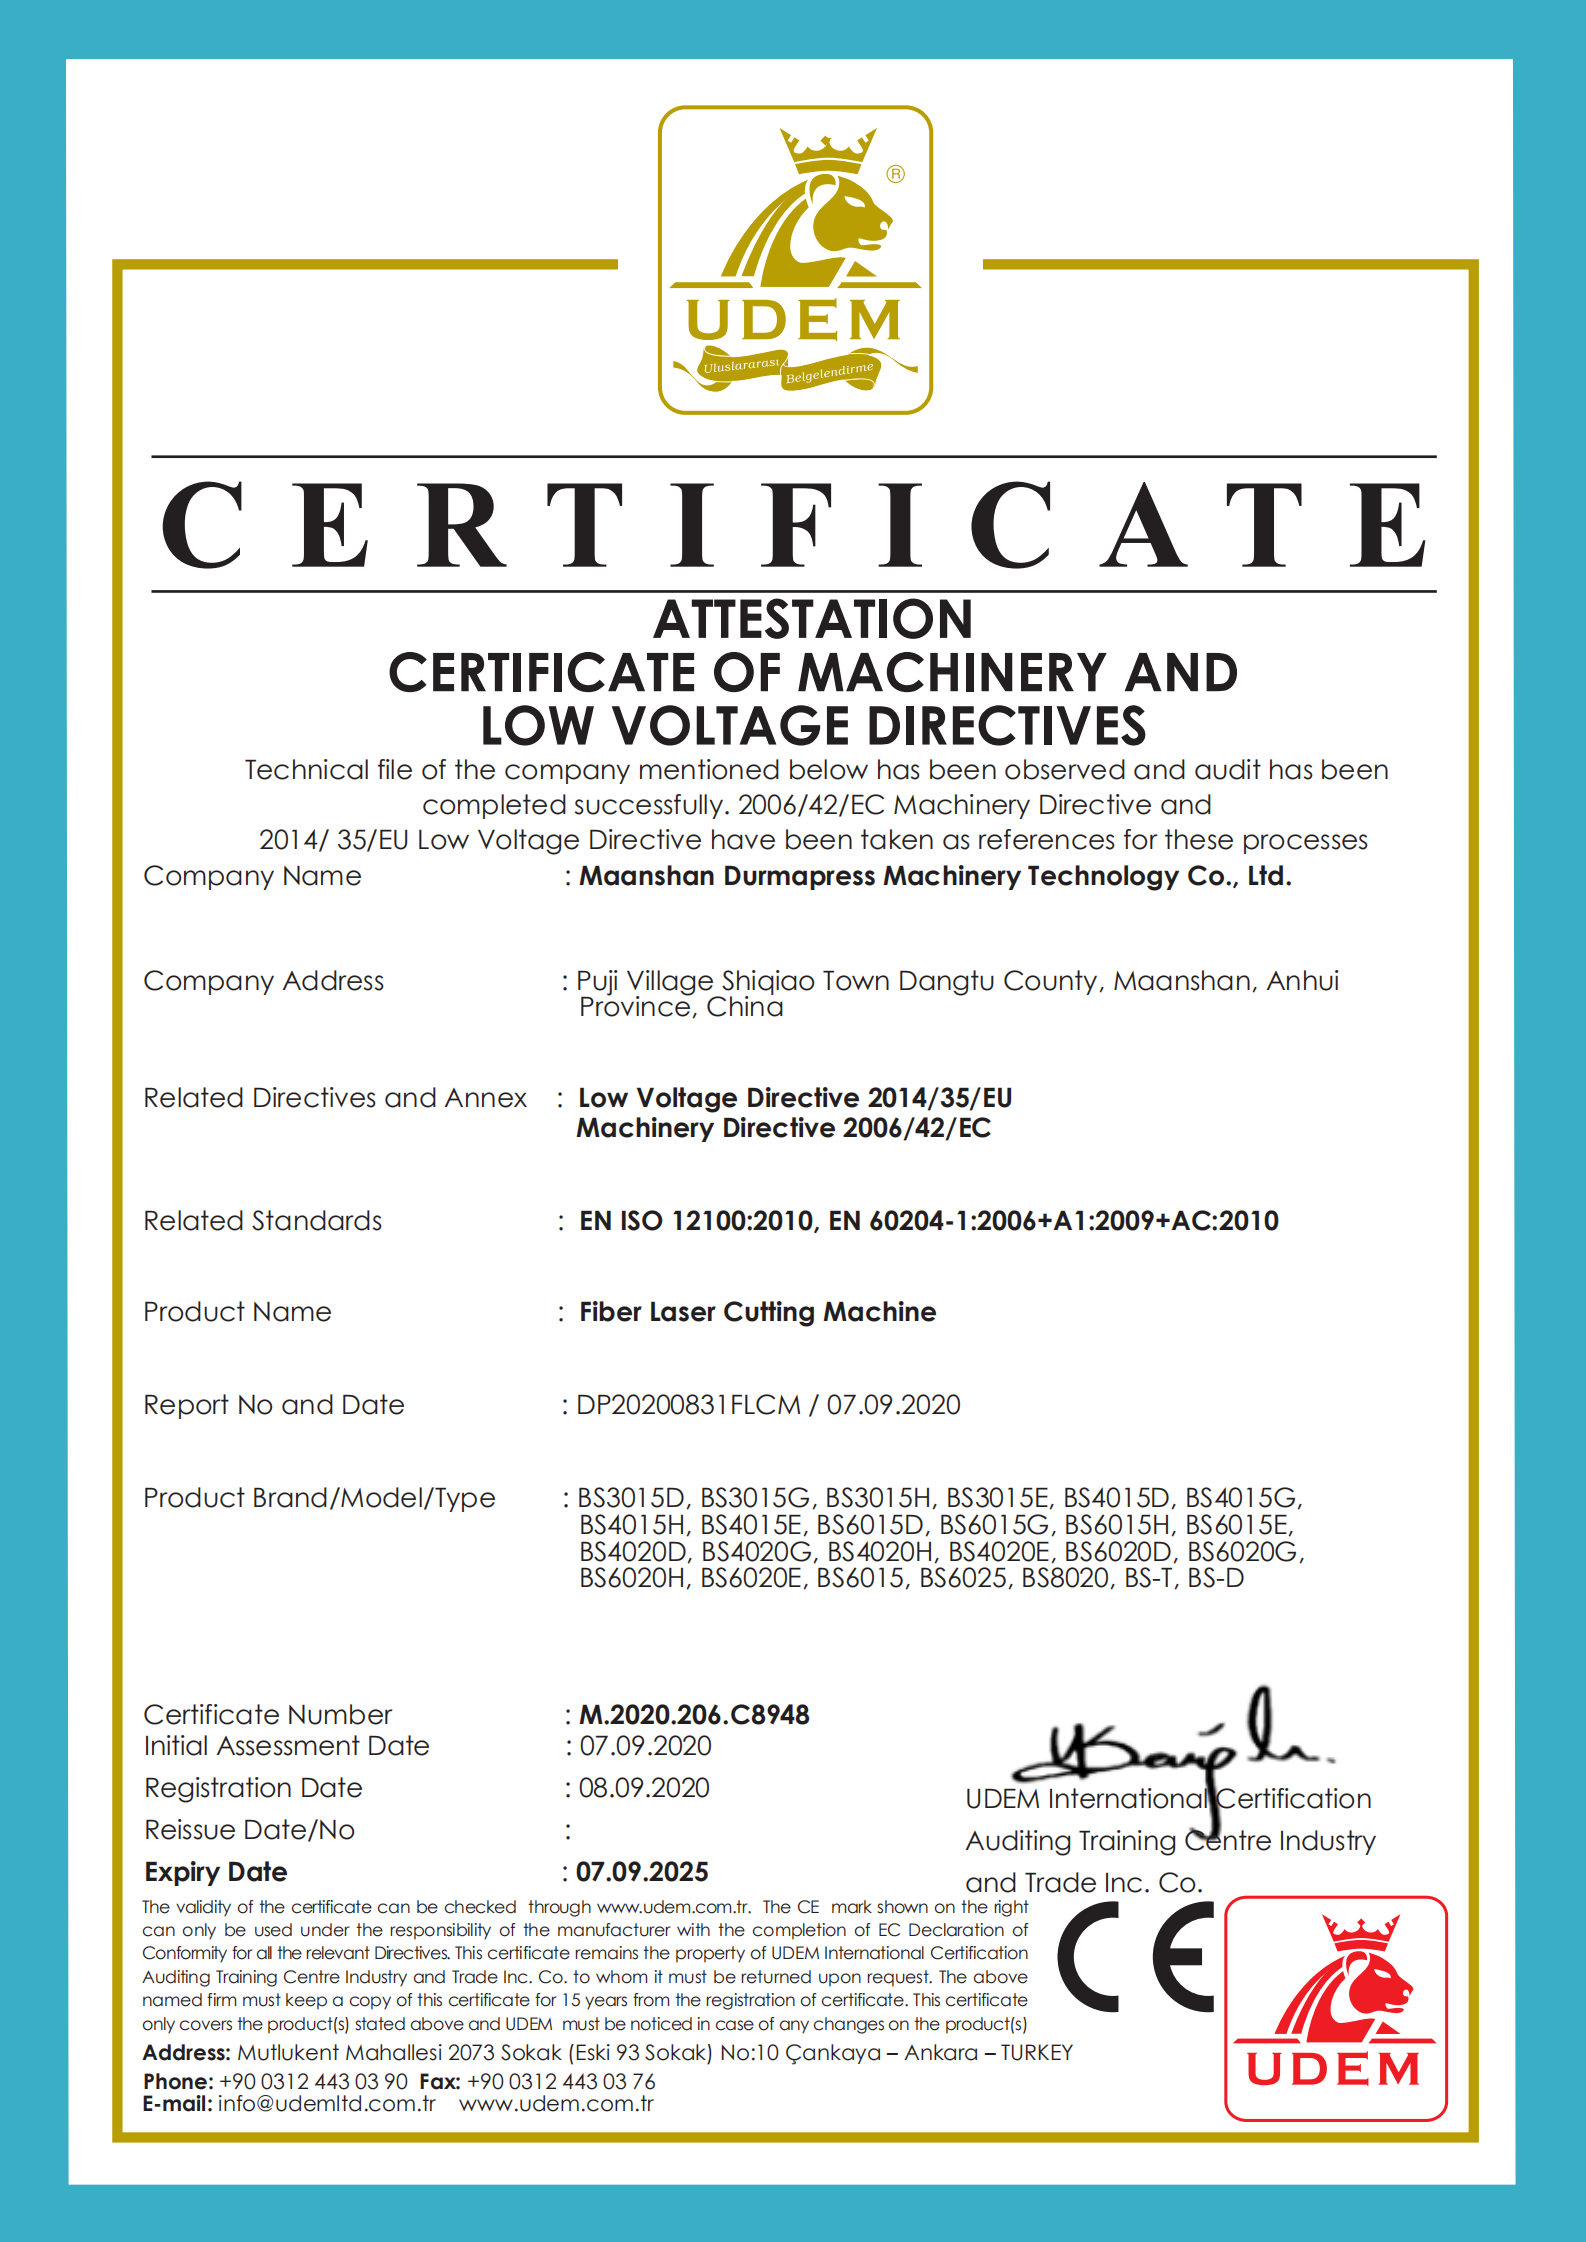 DurmaPress Fiber Laser Cutting Machine CE Certification